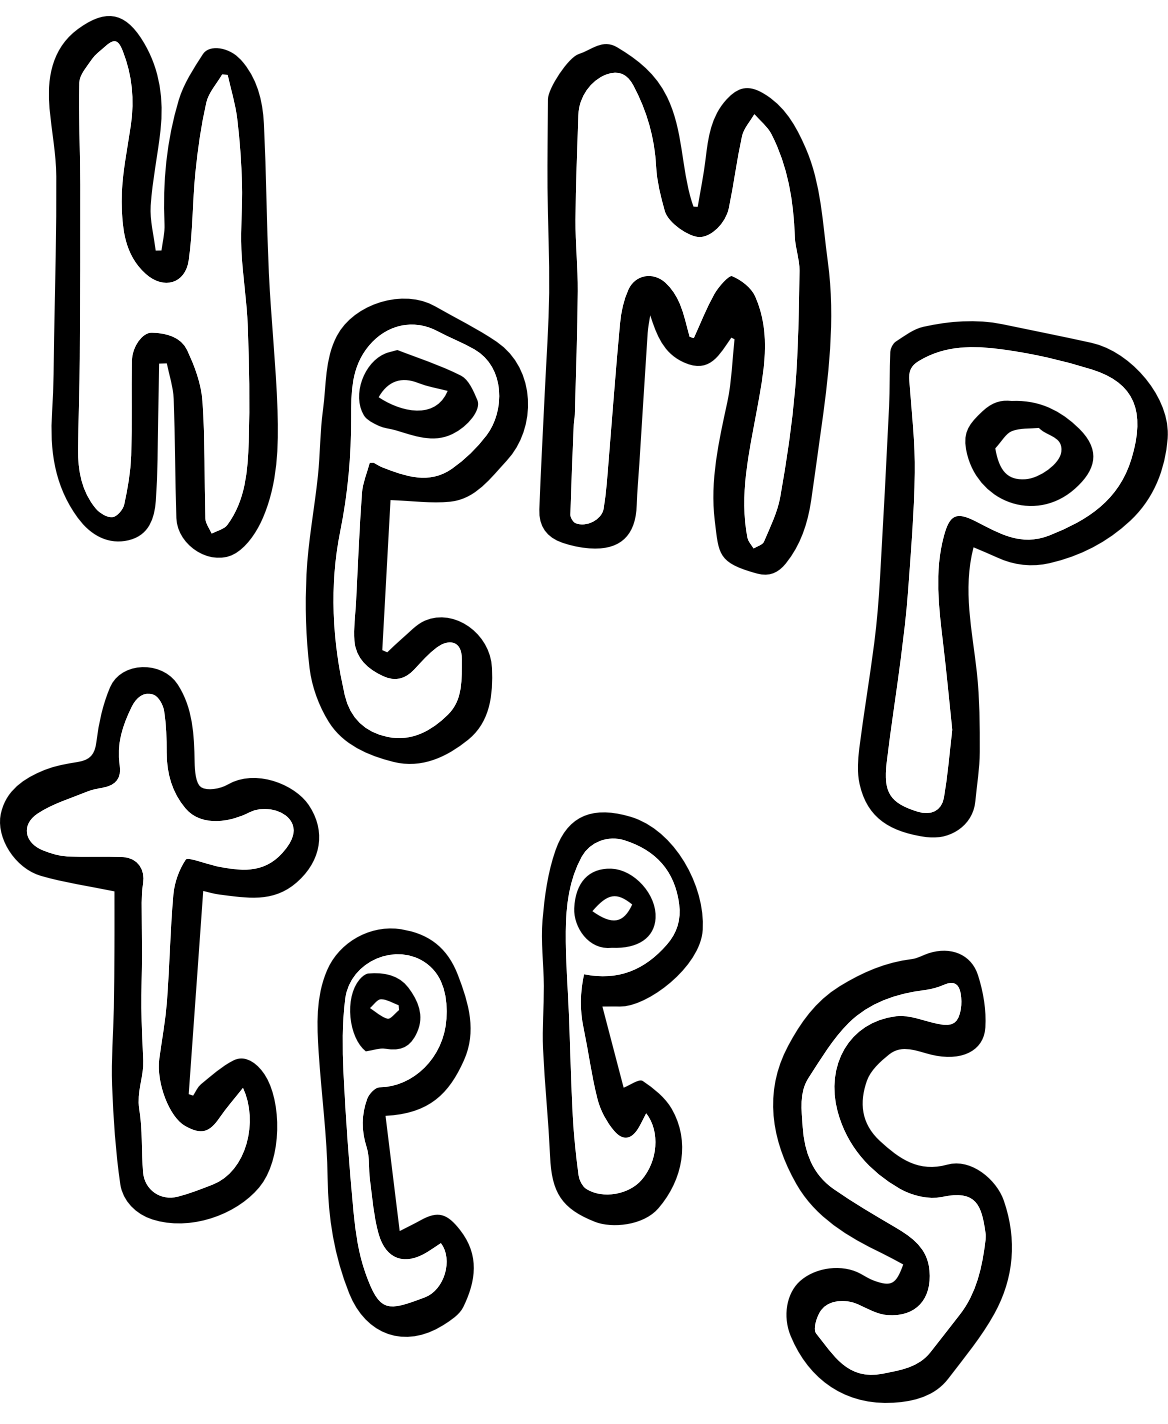 Hemptees logo